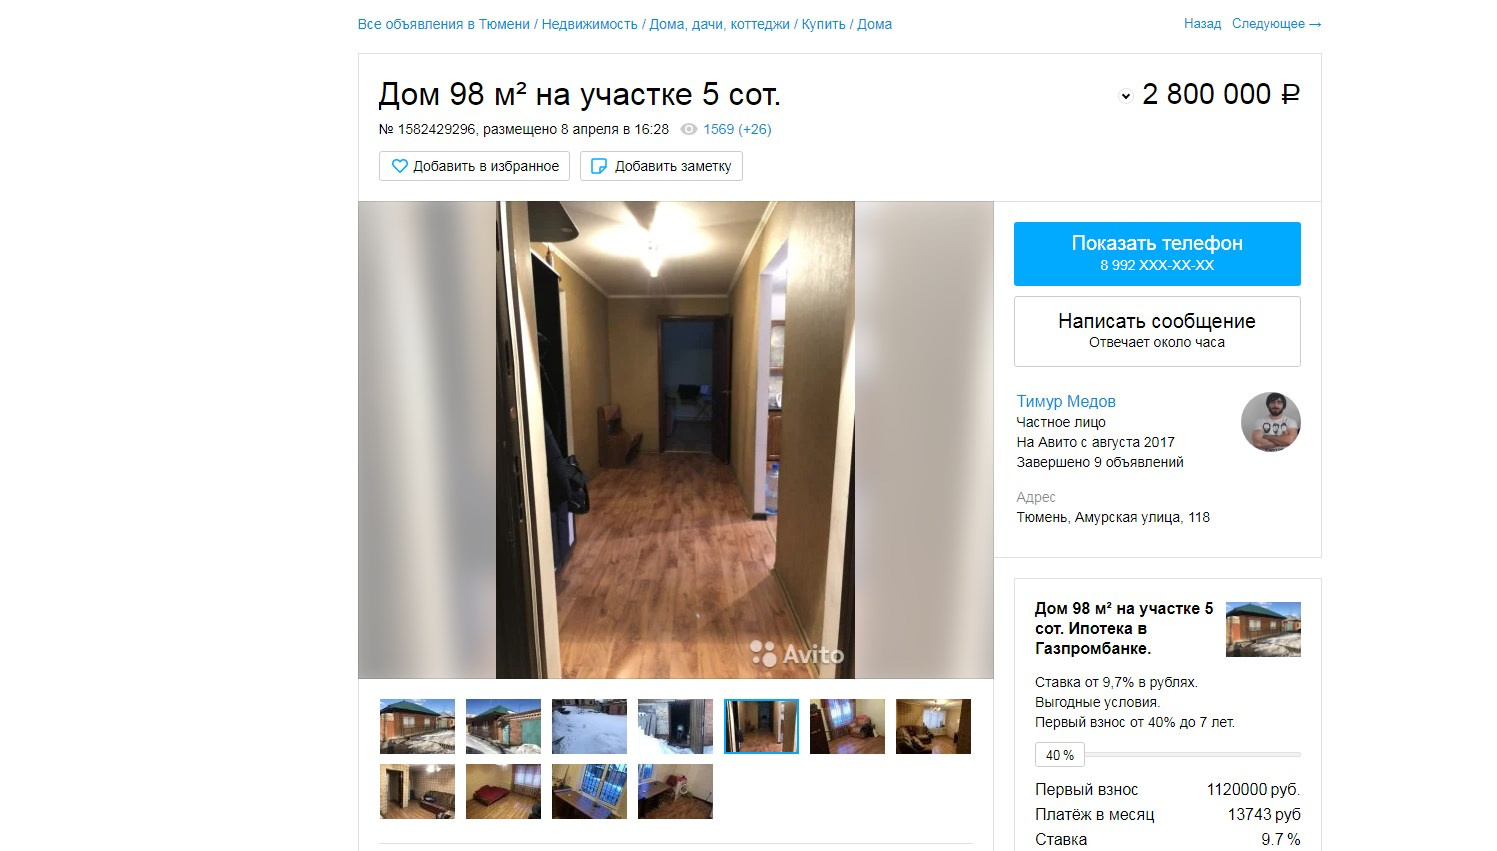 Дом и участок продавали почти за три миллиона рублей